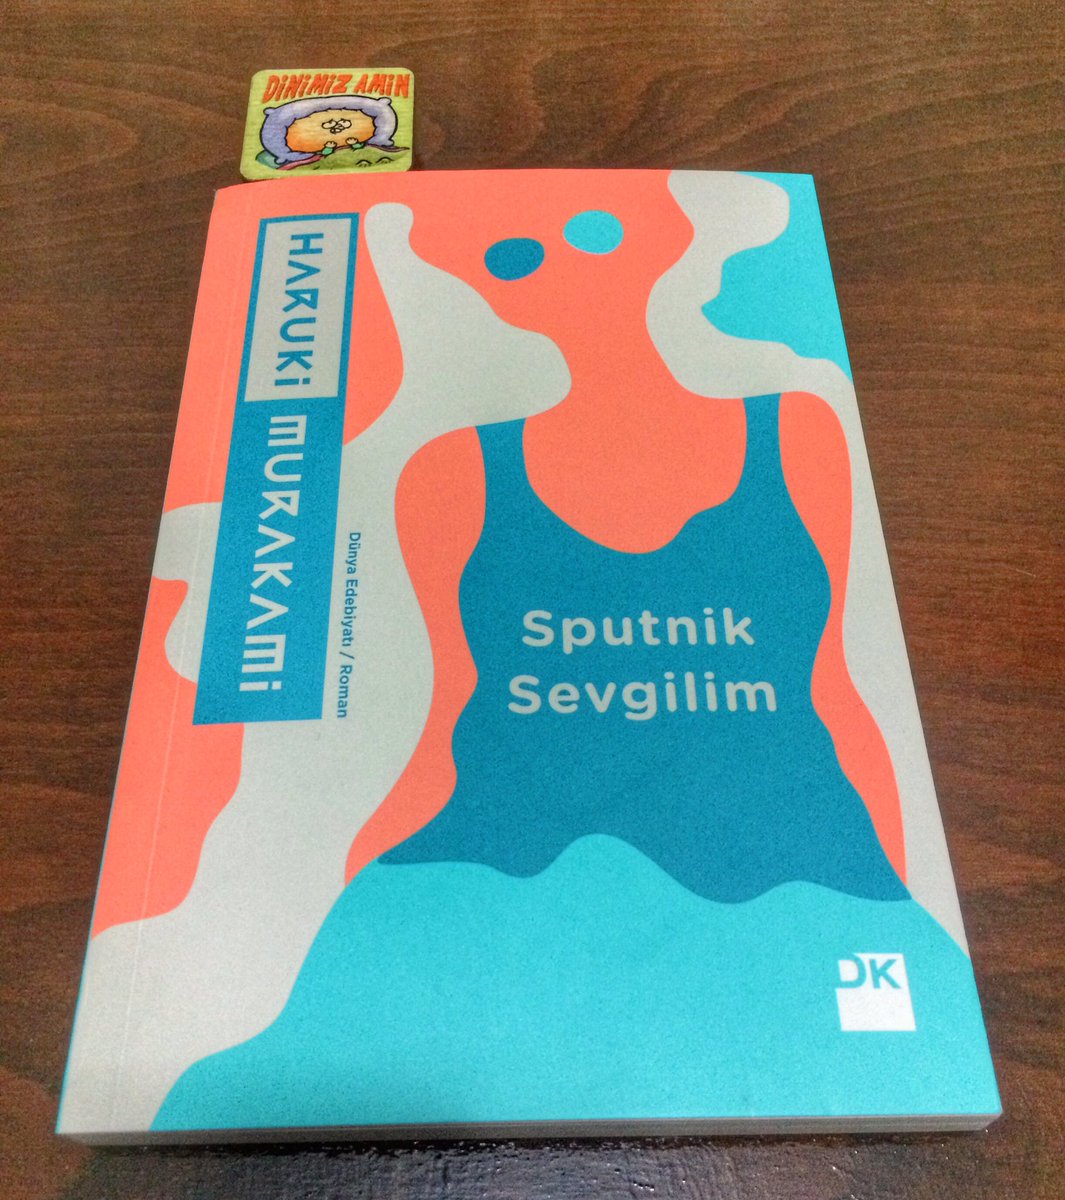 Haftaya Murakami ile başlamak! 🎉📚🏝📖 #HarukiMurakami #SputnikSevgilim #SupütonikuNoKoibito #SputnikSweetheart 🤗